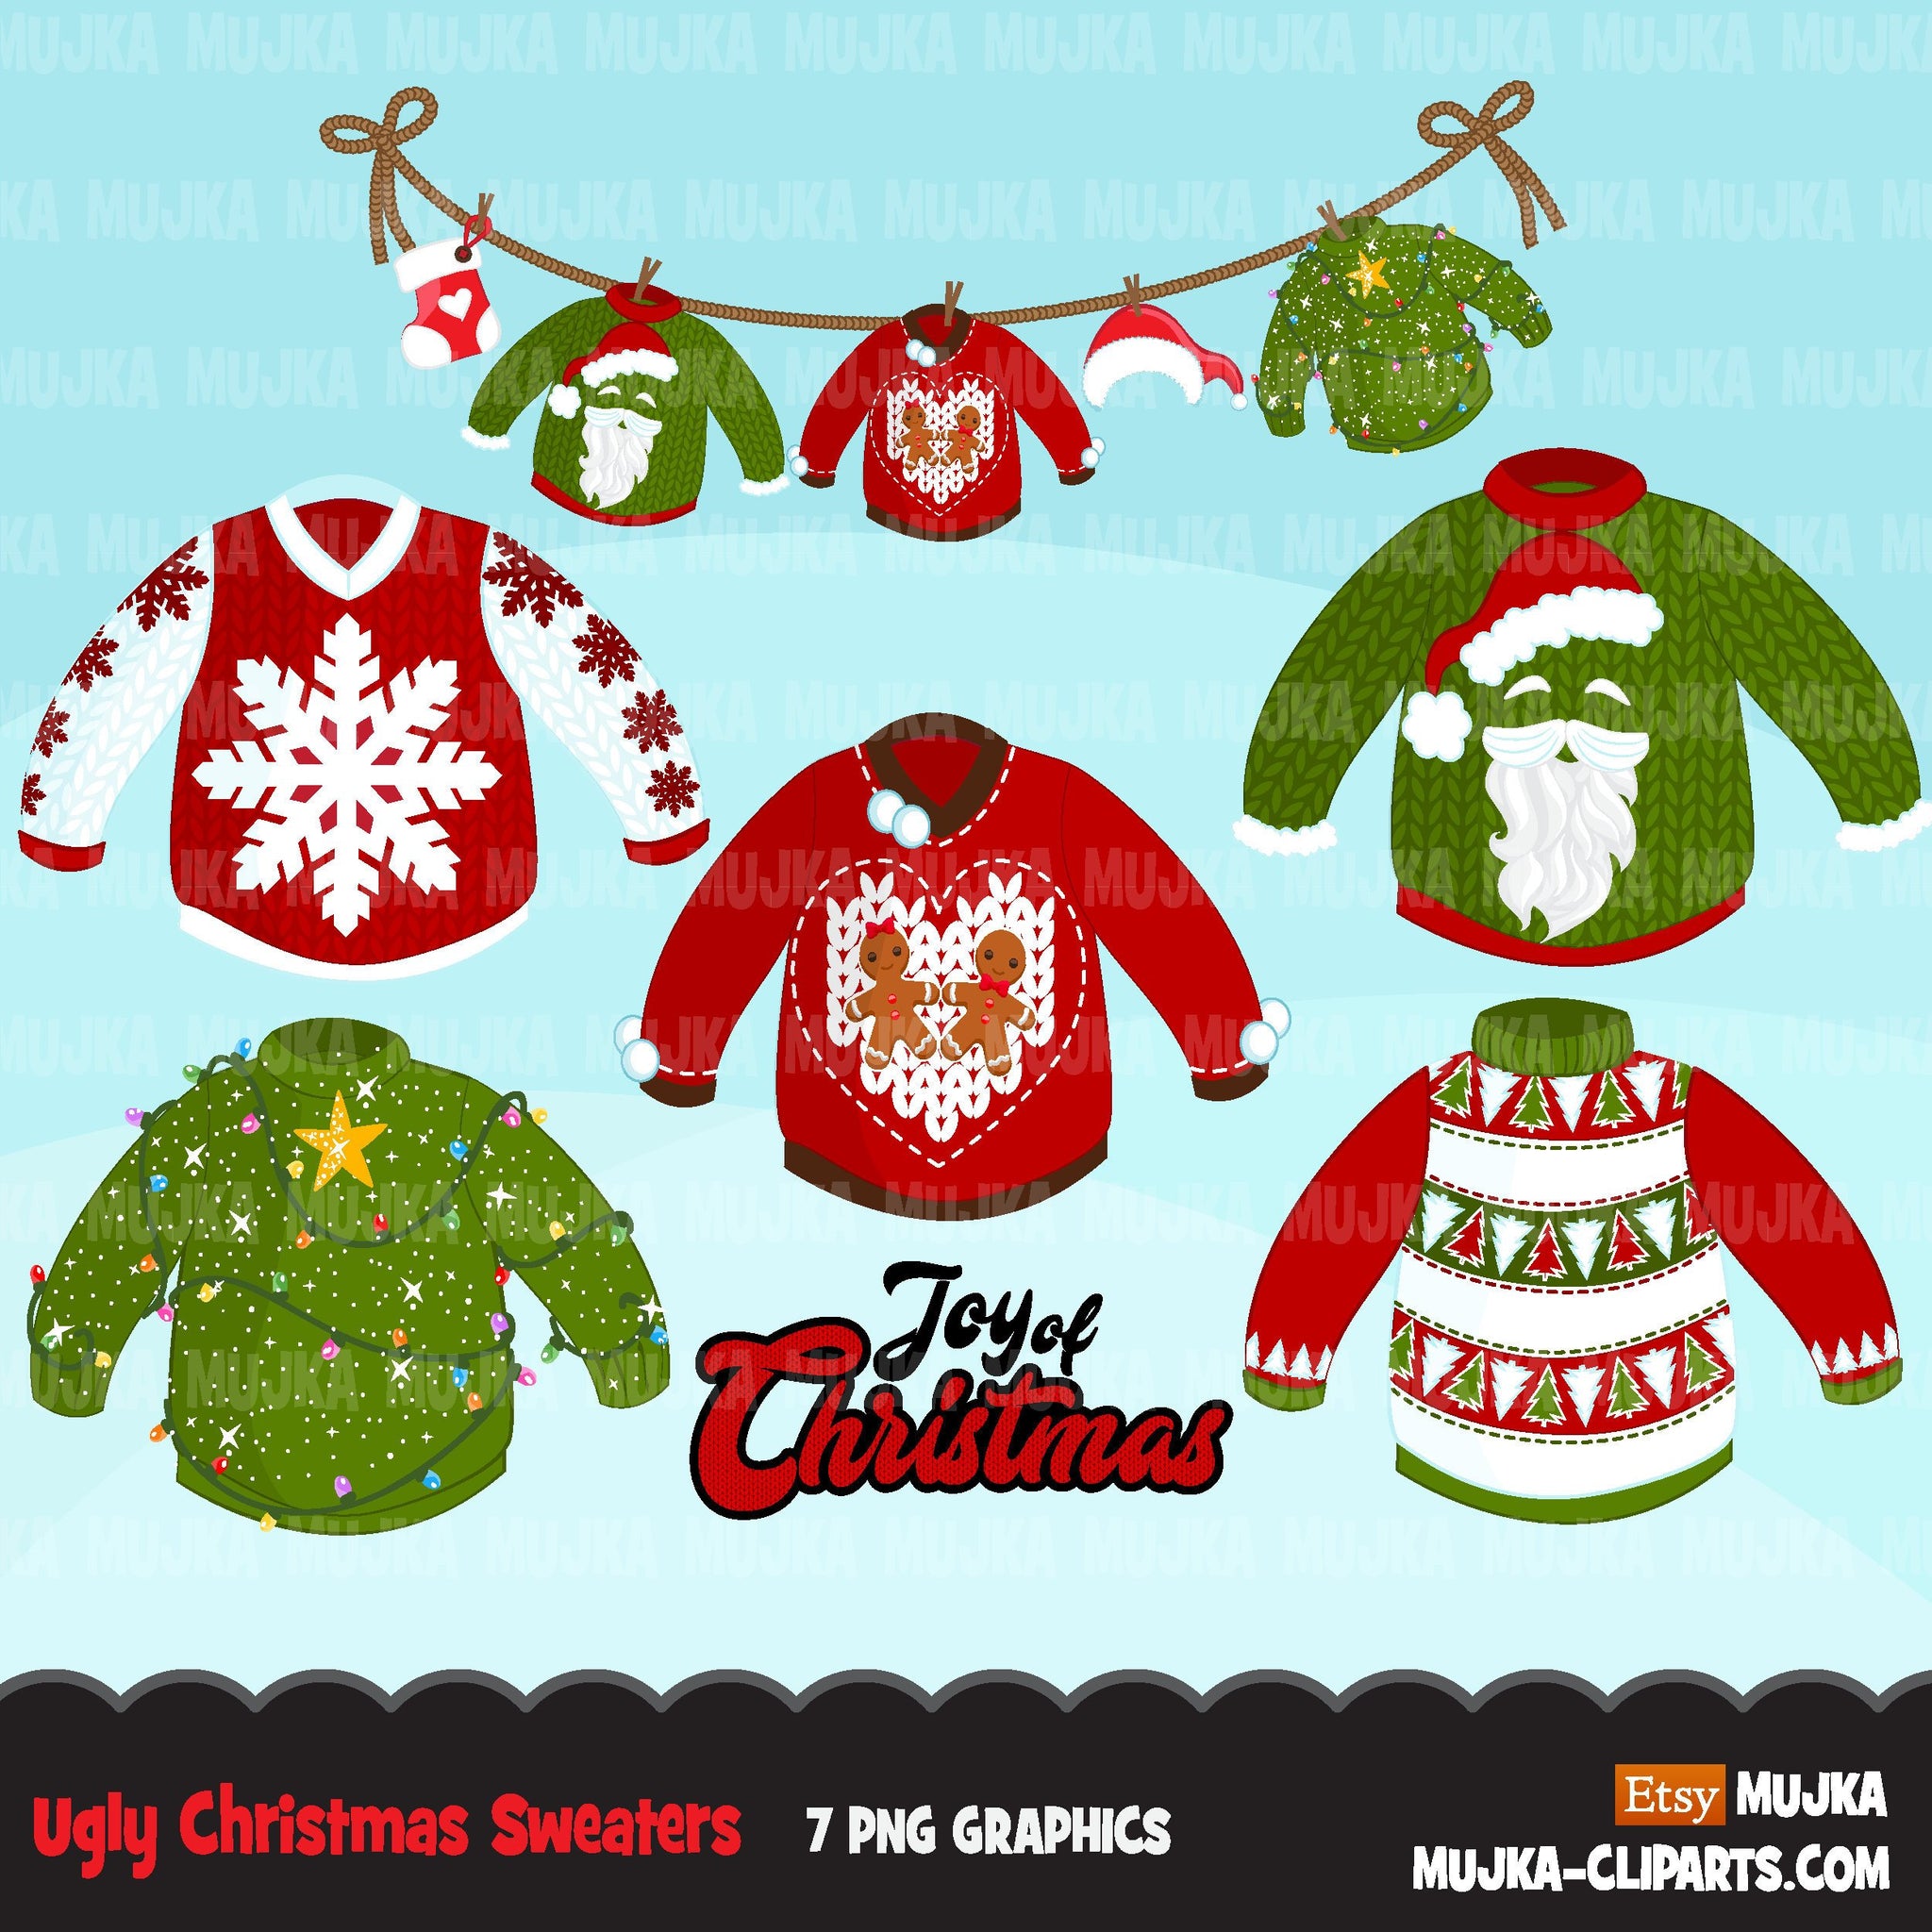 Ugly Christmas Sweaters Clipart, Joy of Chrismas clothesline , noel cardigan graphics